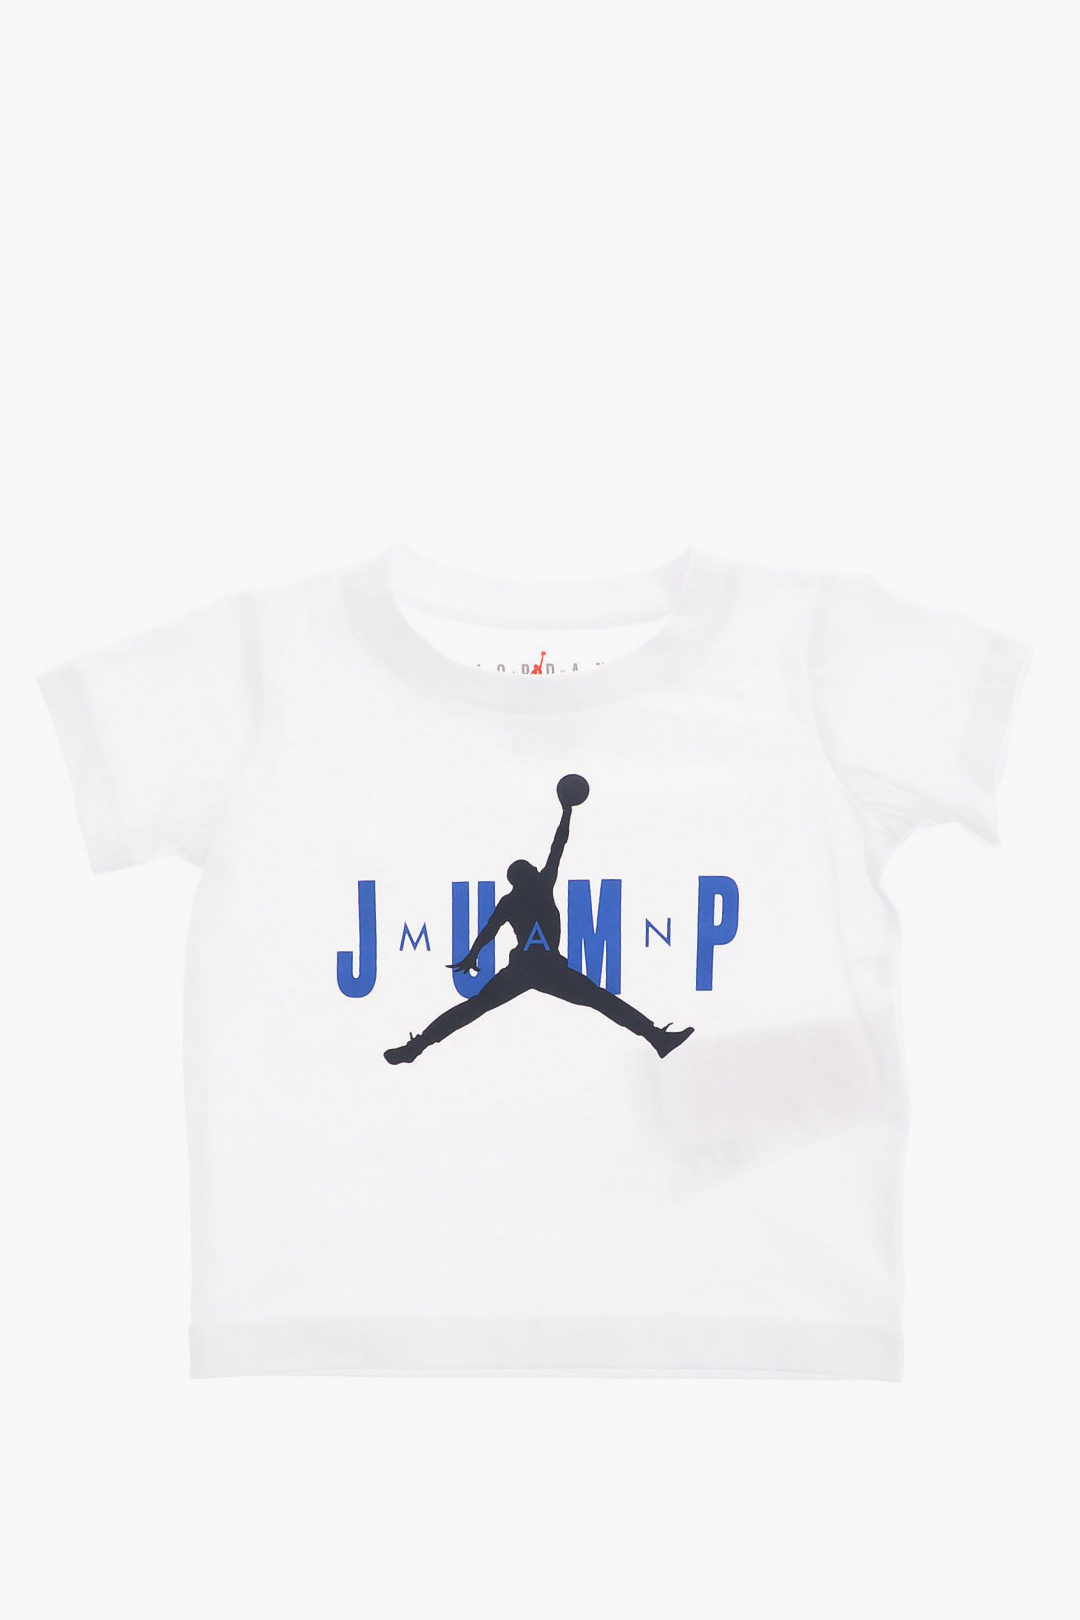 Kids Jordan Tops & T-Shirts.